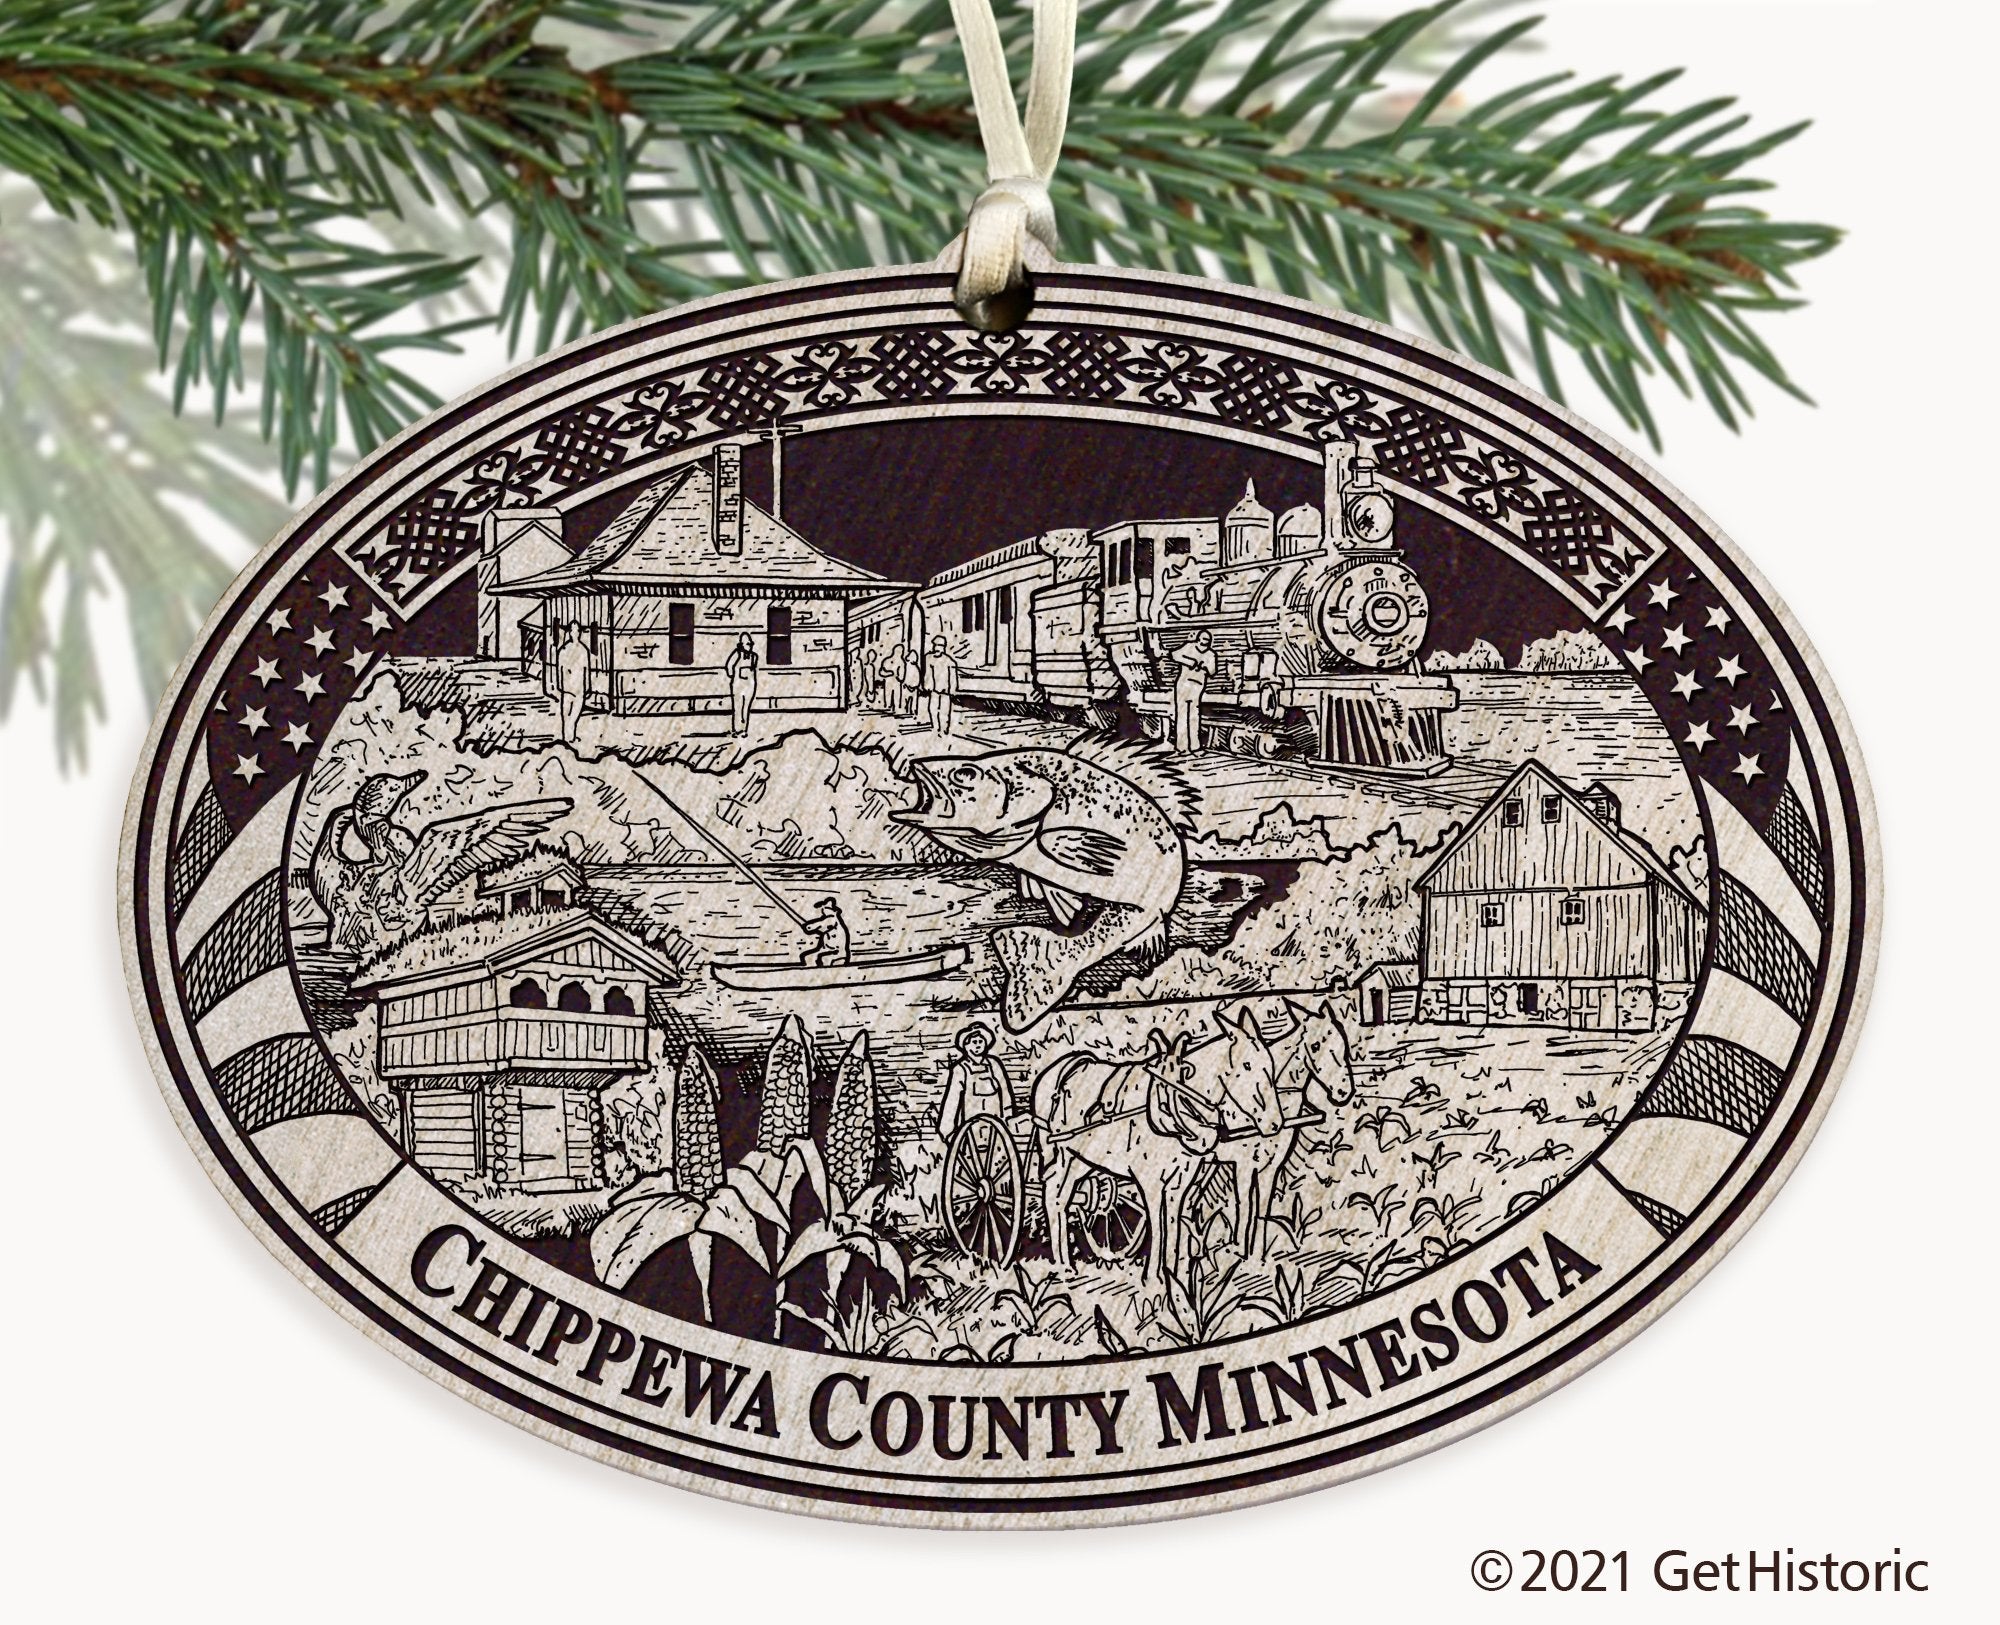 Chippewa County Minnesota Engraved Ornament